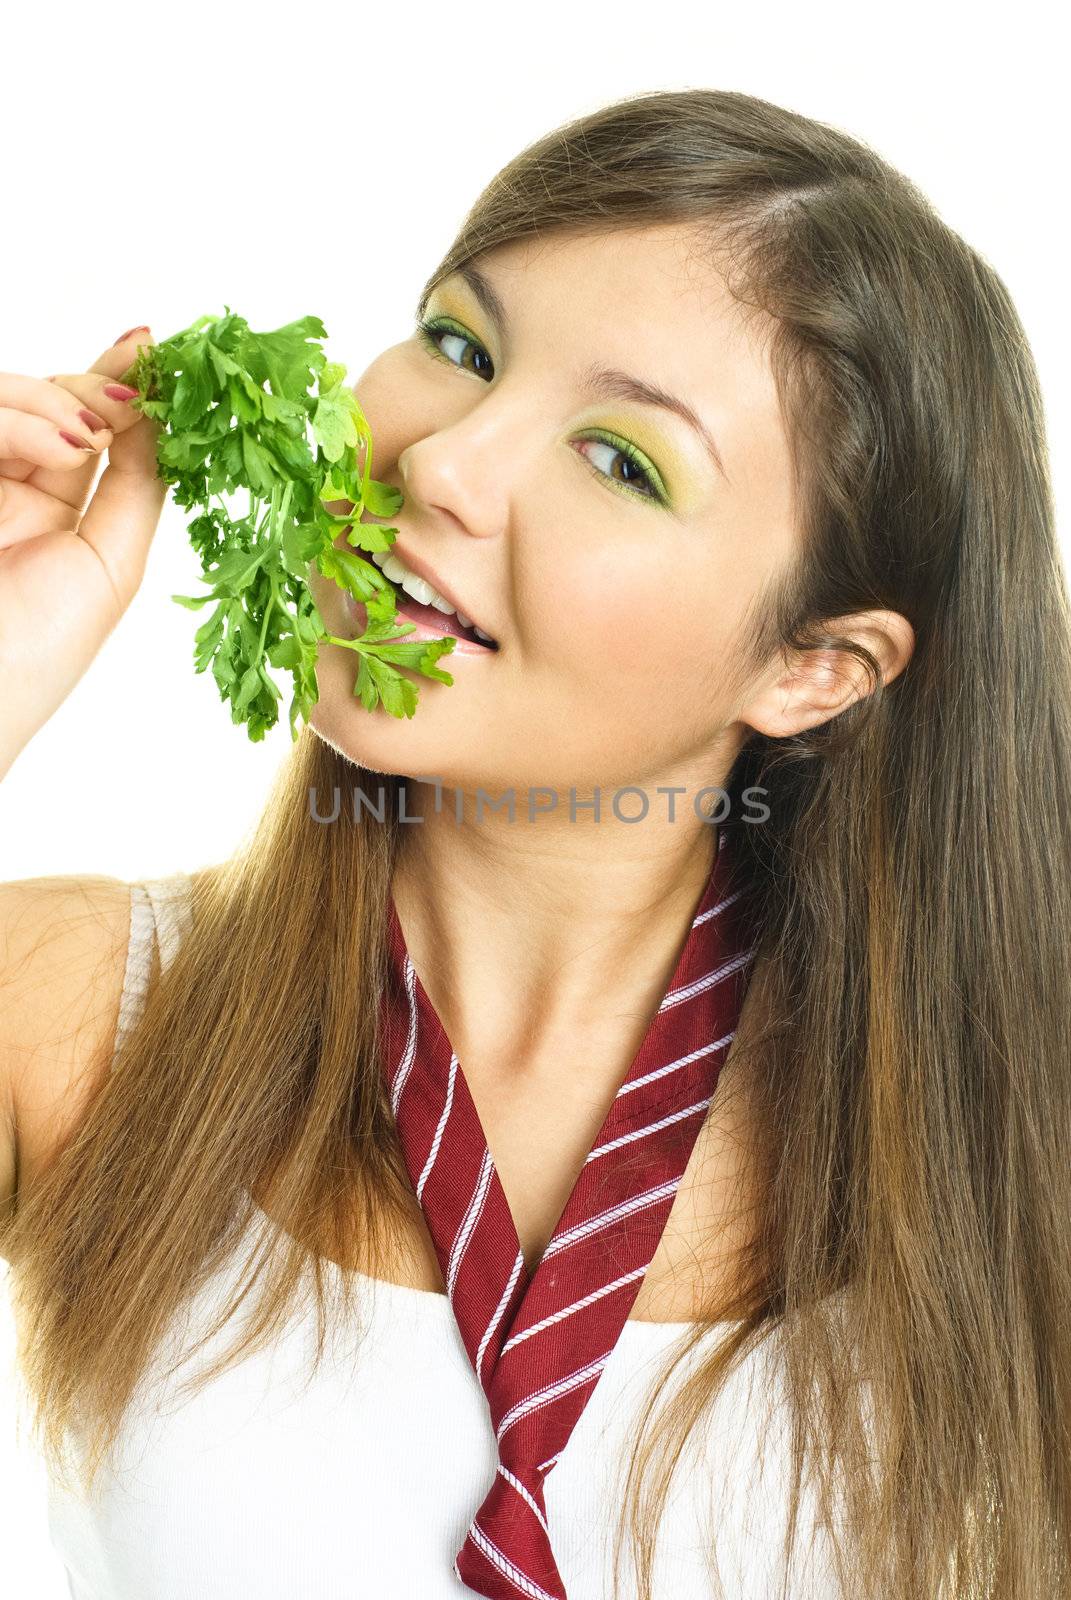 portrait of a happy beautiful brunette girl eating fresh green parsley